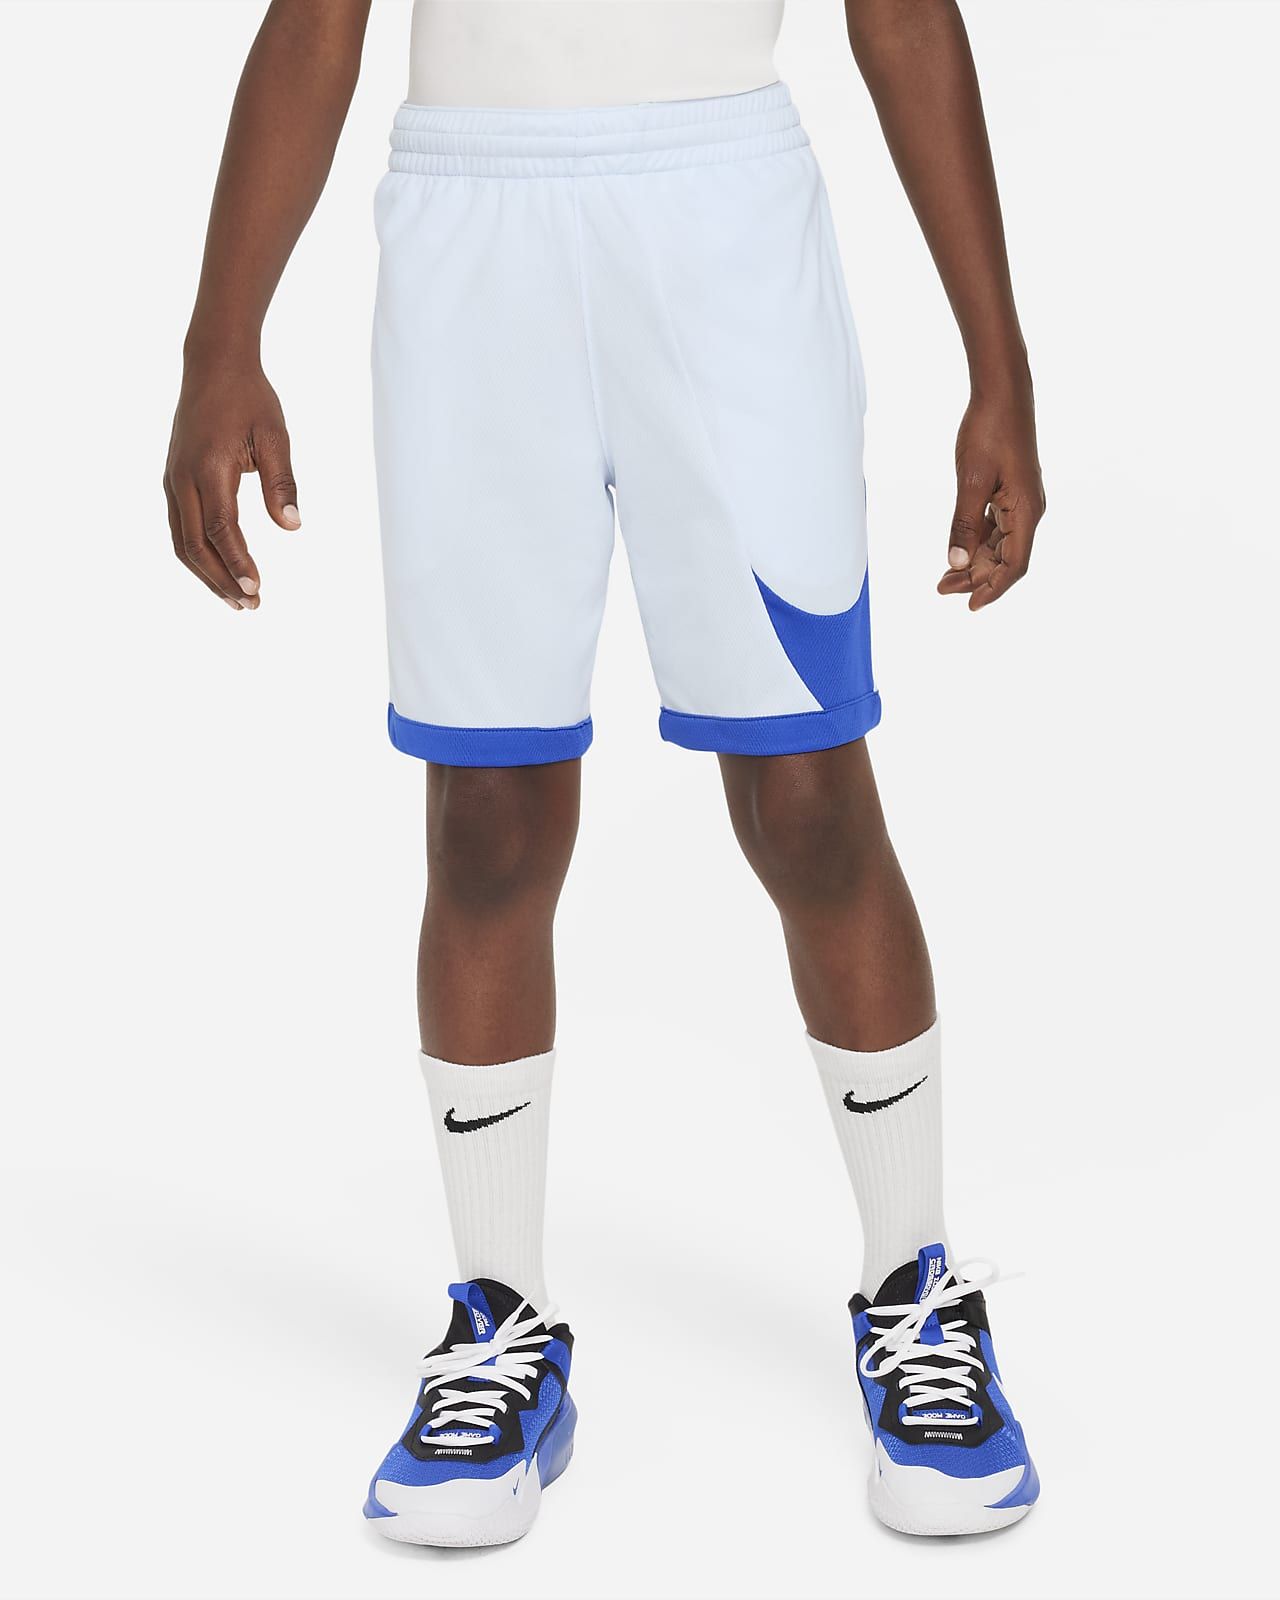 Nike Dri-FIT Big Kids' (Boys') Basketball Shorts. Nike.com | Nike (US)